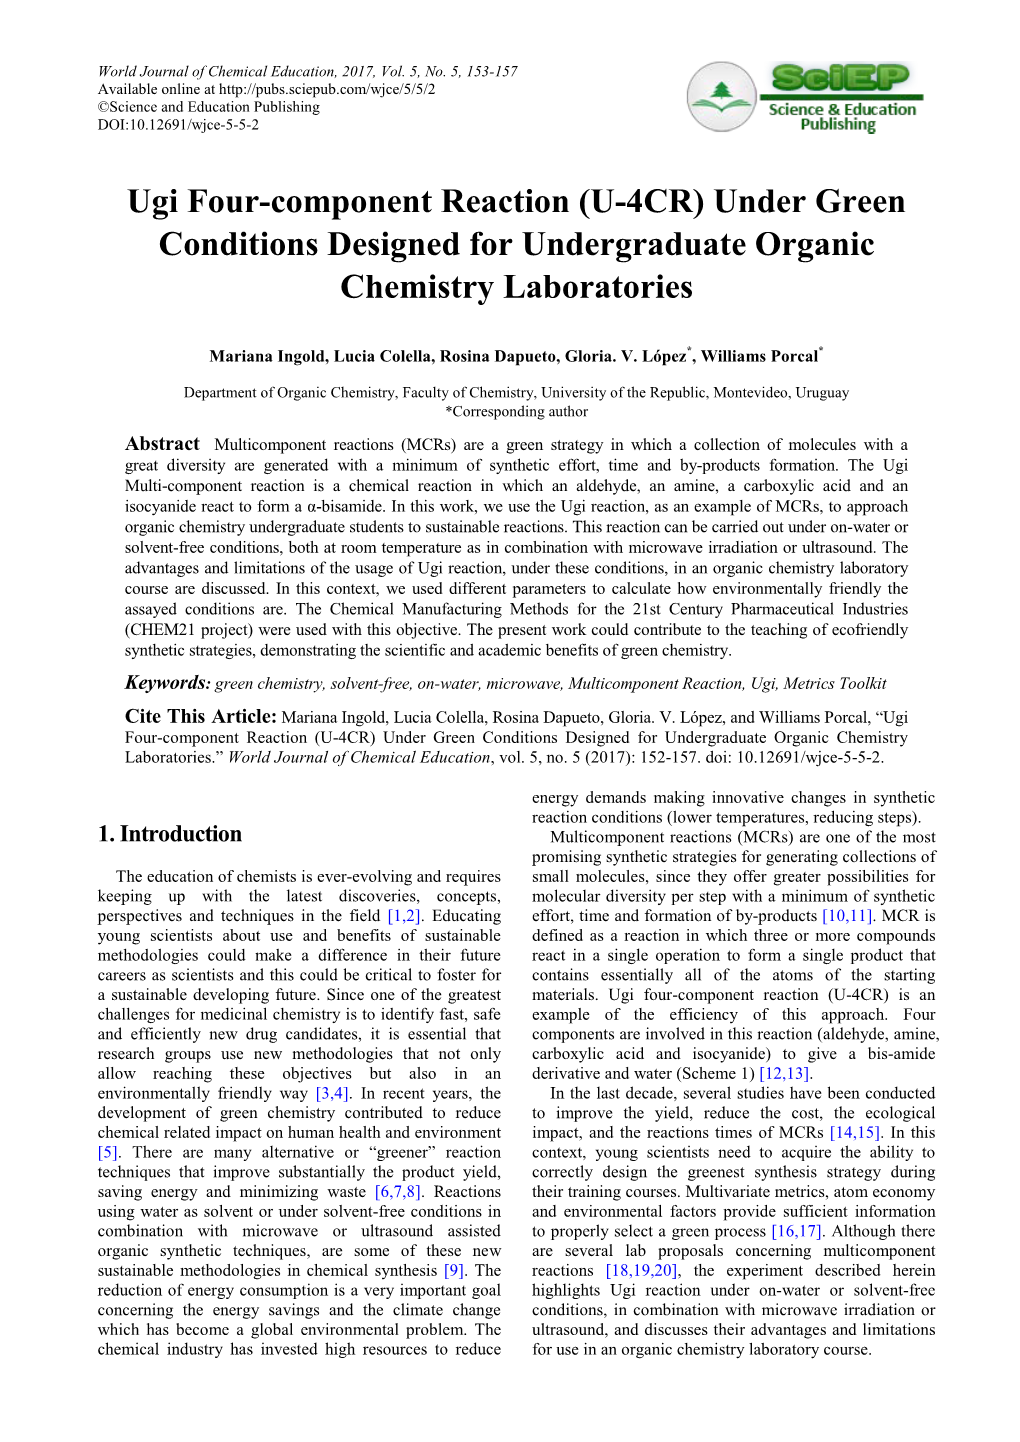 Ugi Four-Component Reaction (U-4CR) Under Green Conditions Designed for Undergraduate Organic Chemistry Laboratories